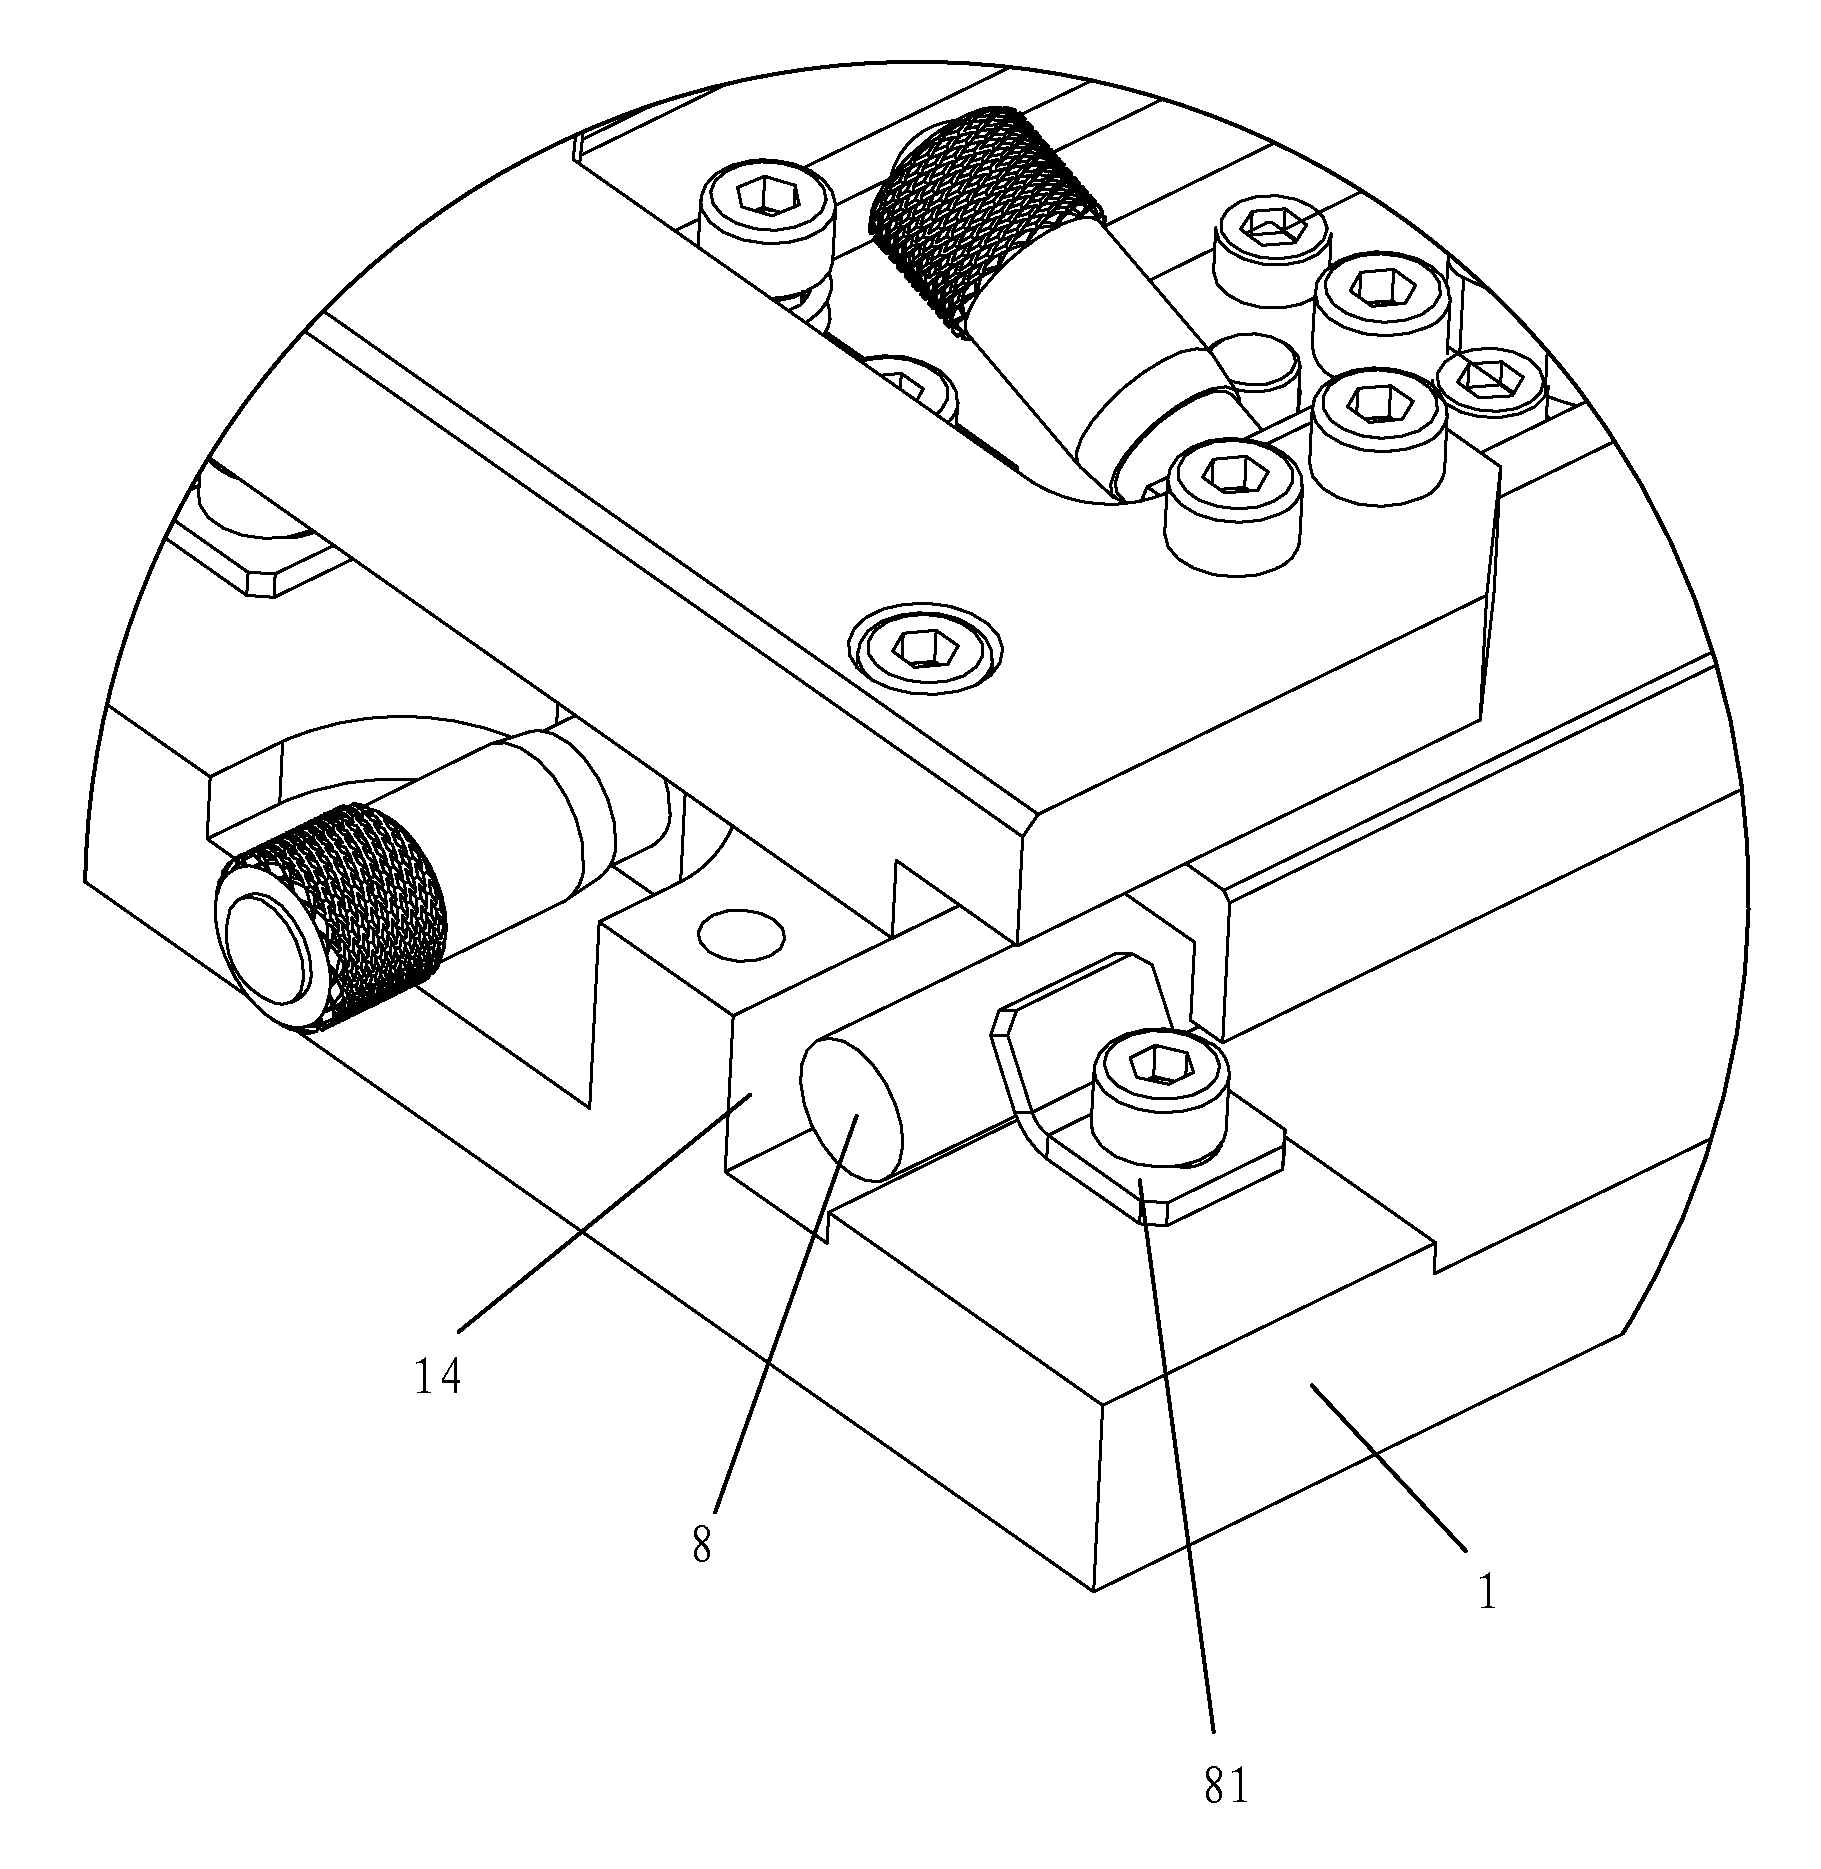 Print head mounting and adjusting mechanism